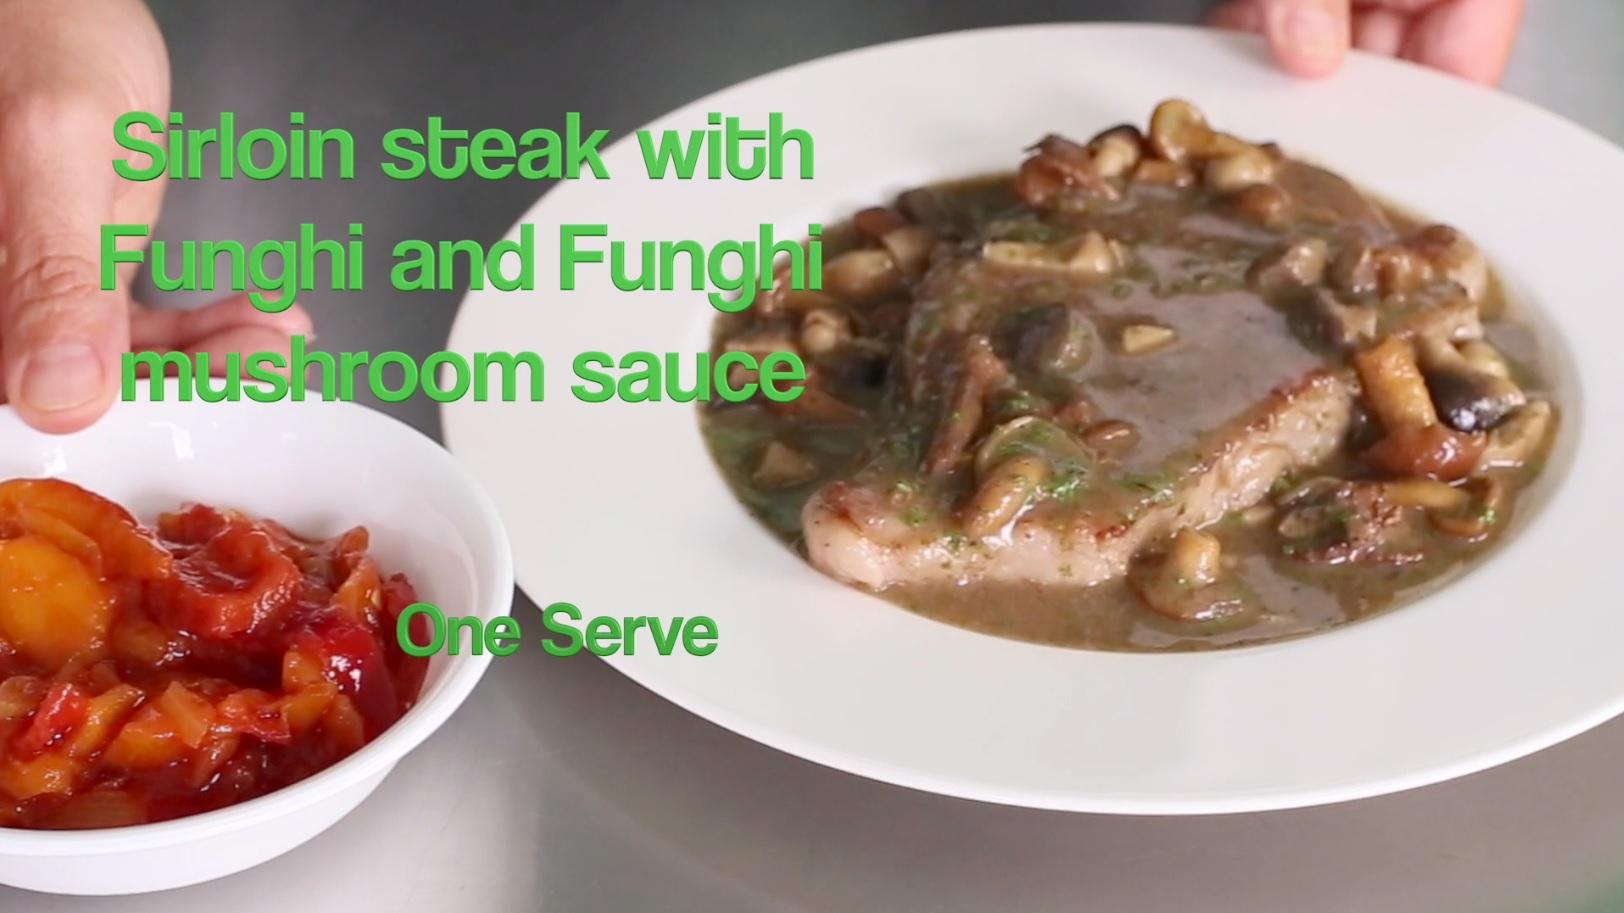 RECIPE: Sirloin Steak with Mushroom Sauce